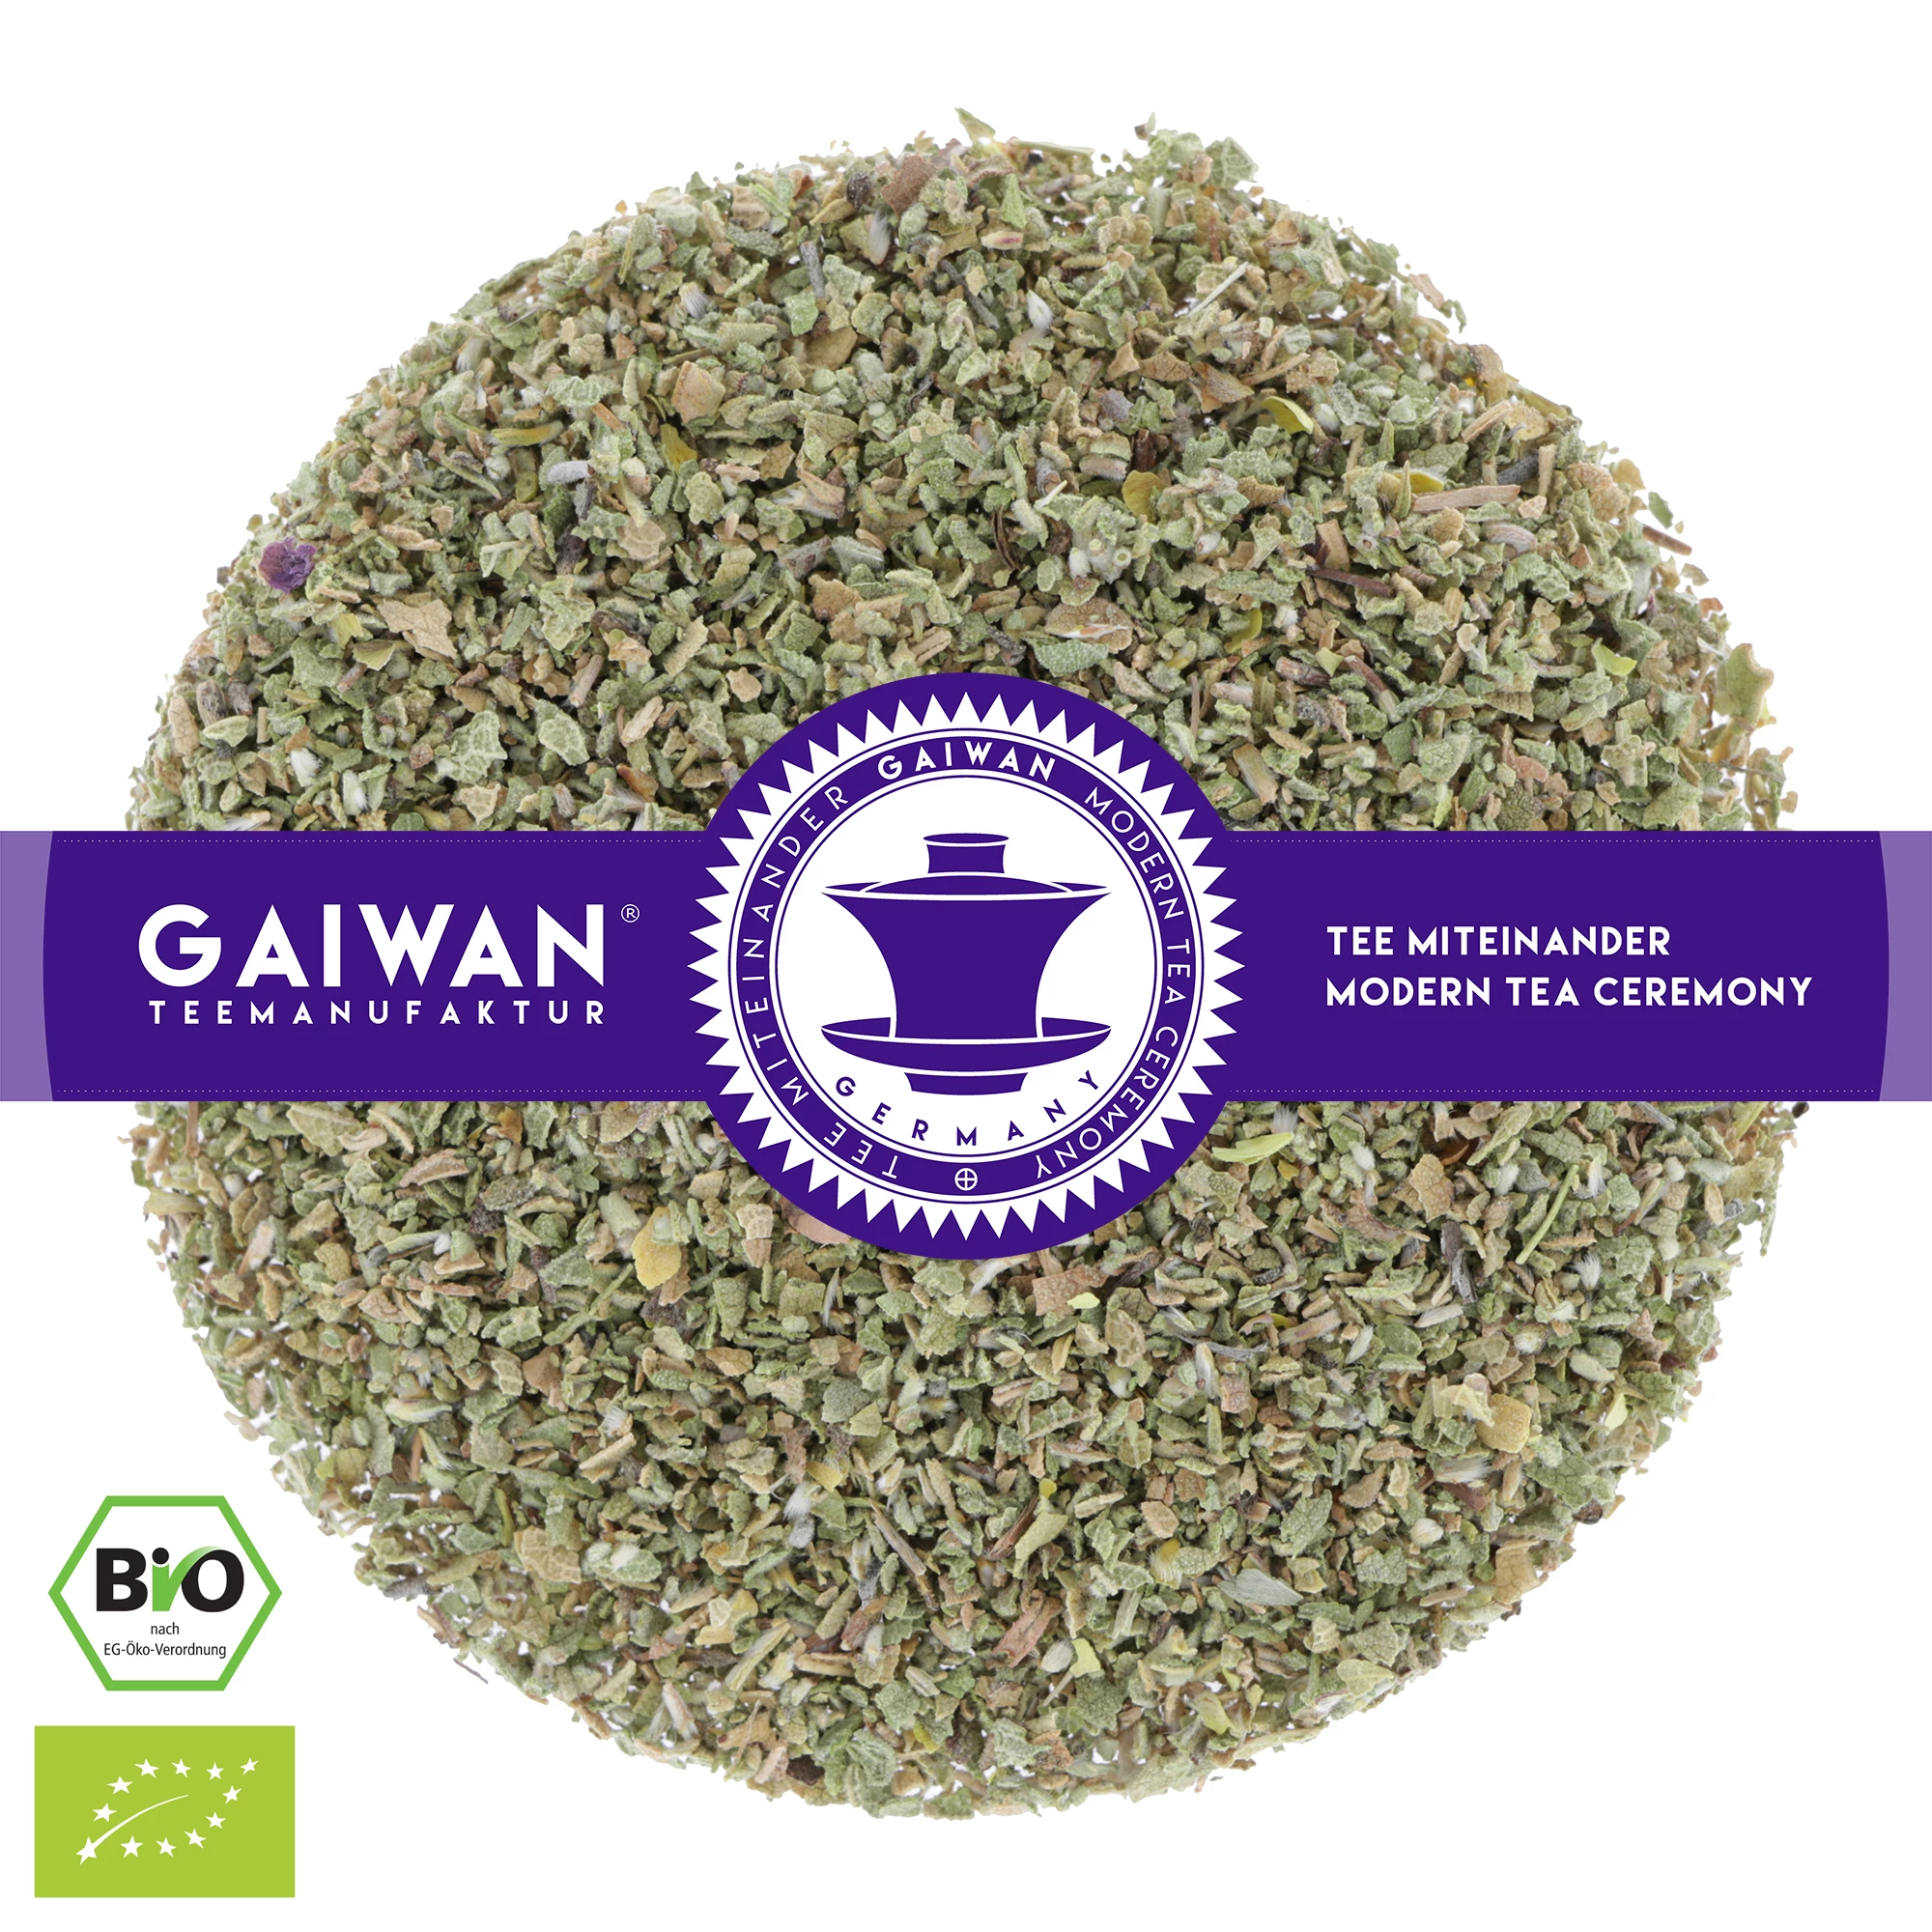 Organic herbal tea loose leaf "Cistus"  - GAIWAN® Tea No. 1407